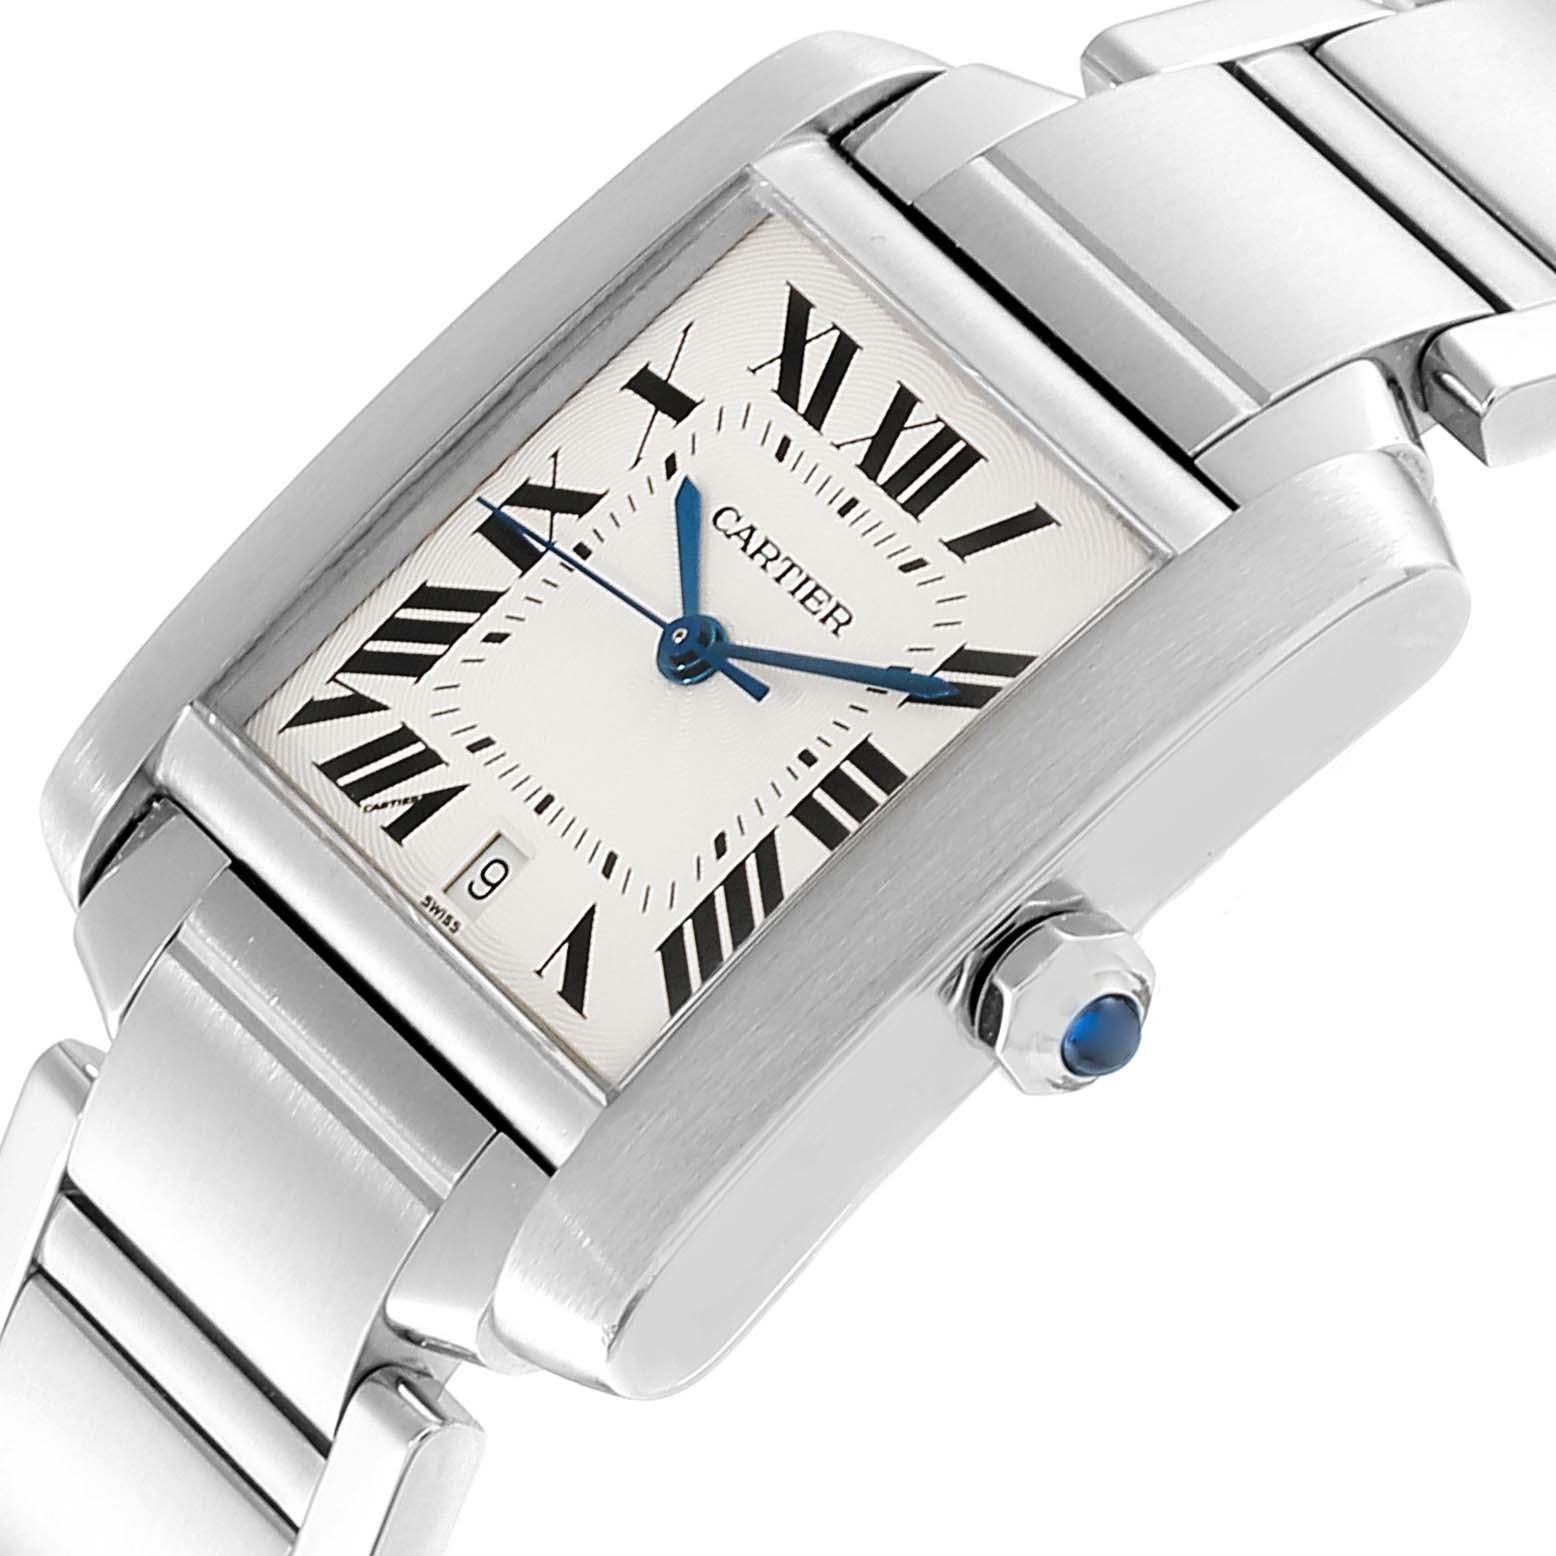 Cartier Tank Francaise Large Steel Automatic Men's Watch W51002Q3 For Sale 1